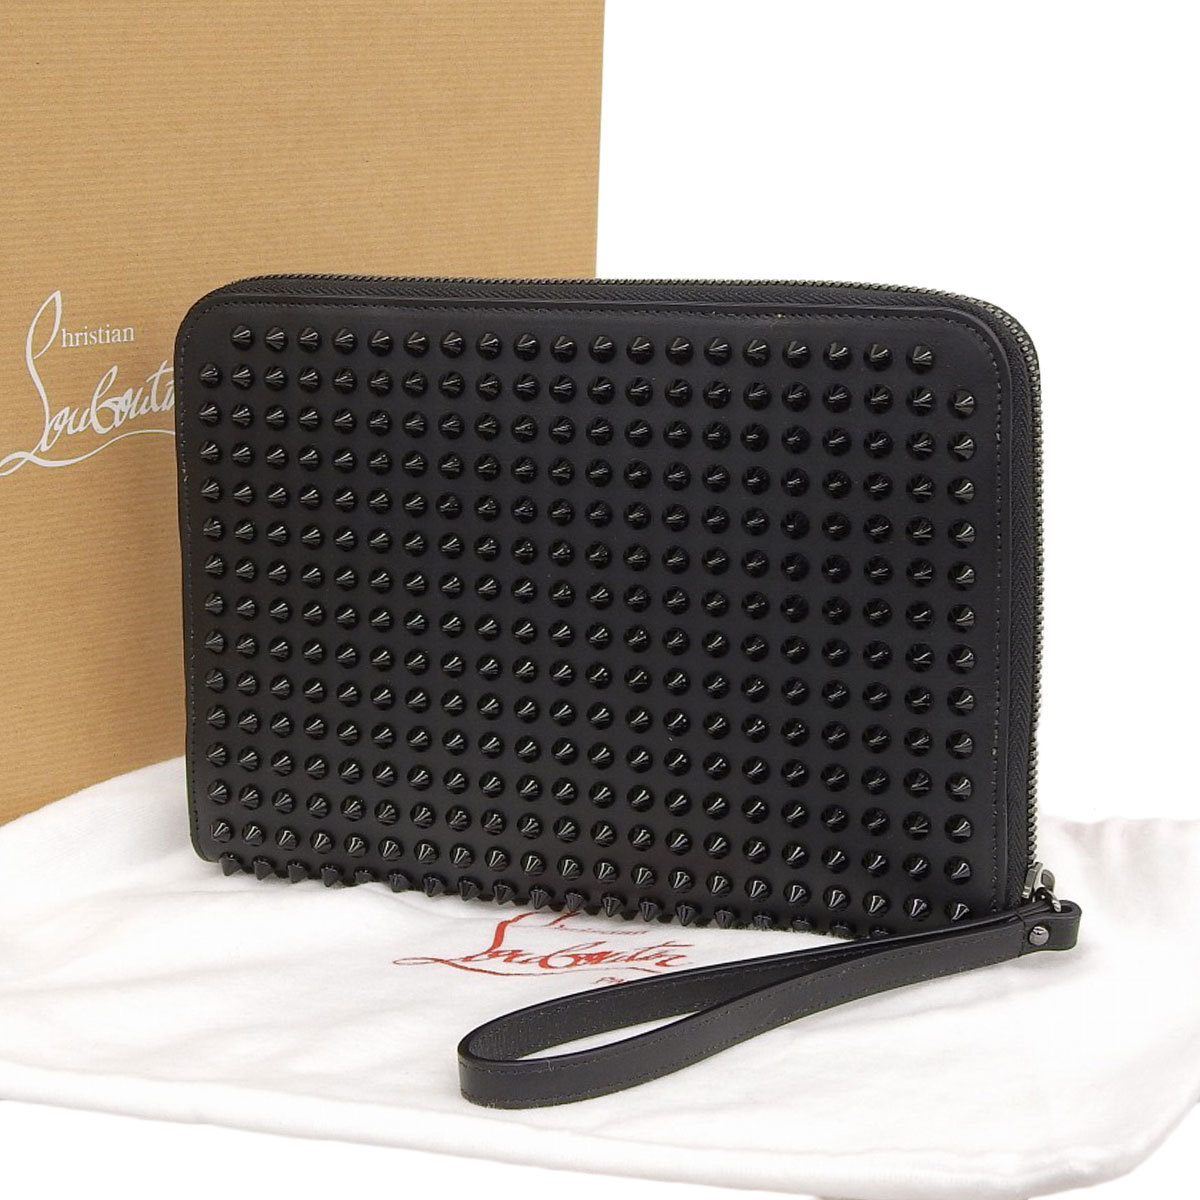  Christian Louboutin Christian Louboutin iPad Mini case studs spike leather black men's lady's 8570